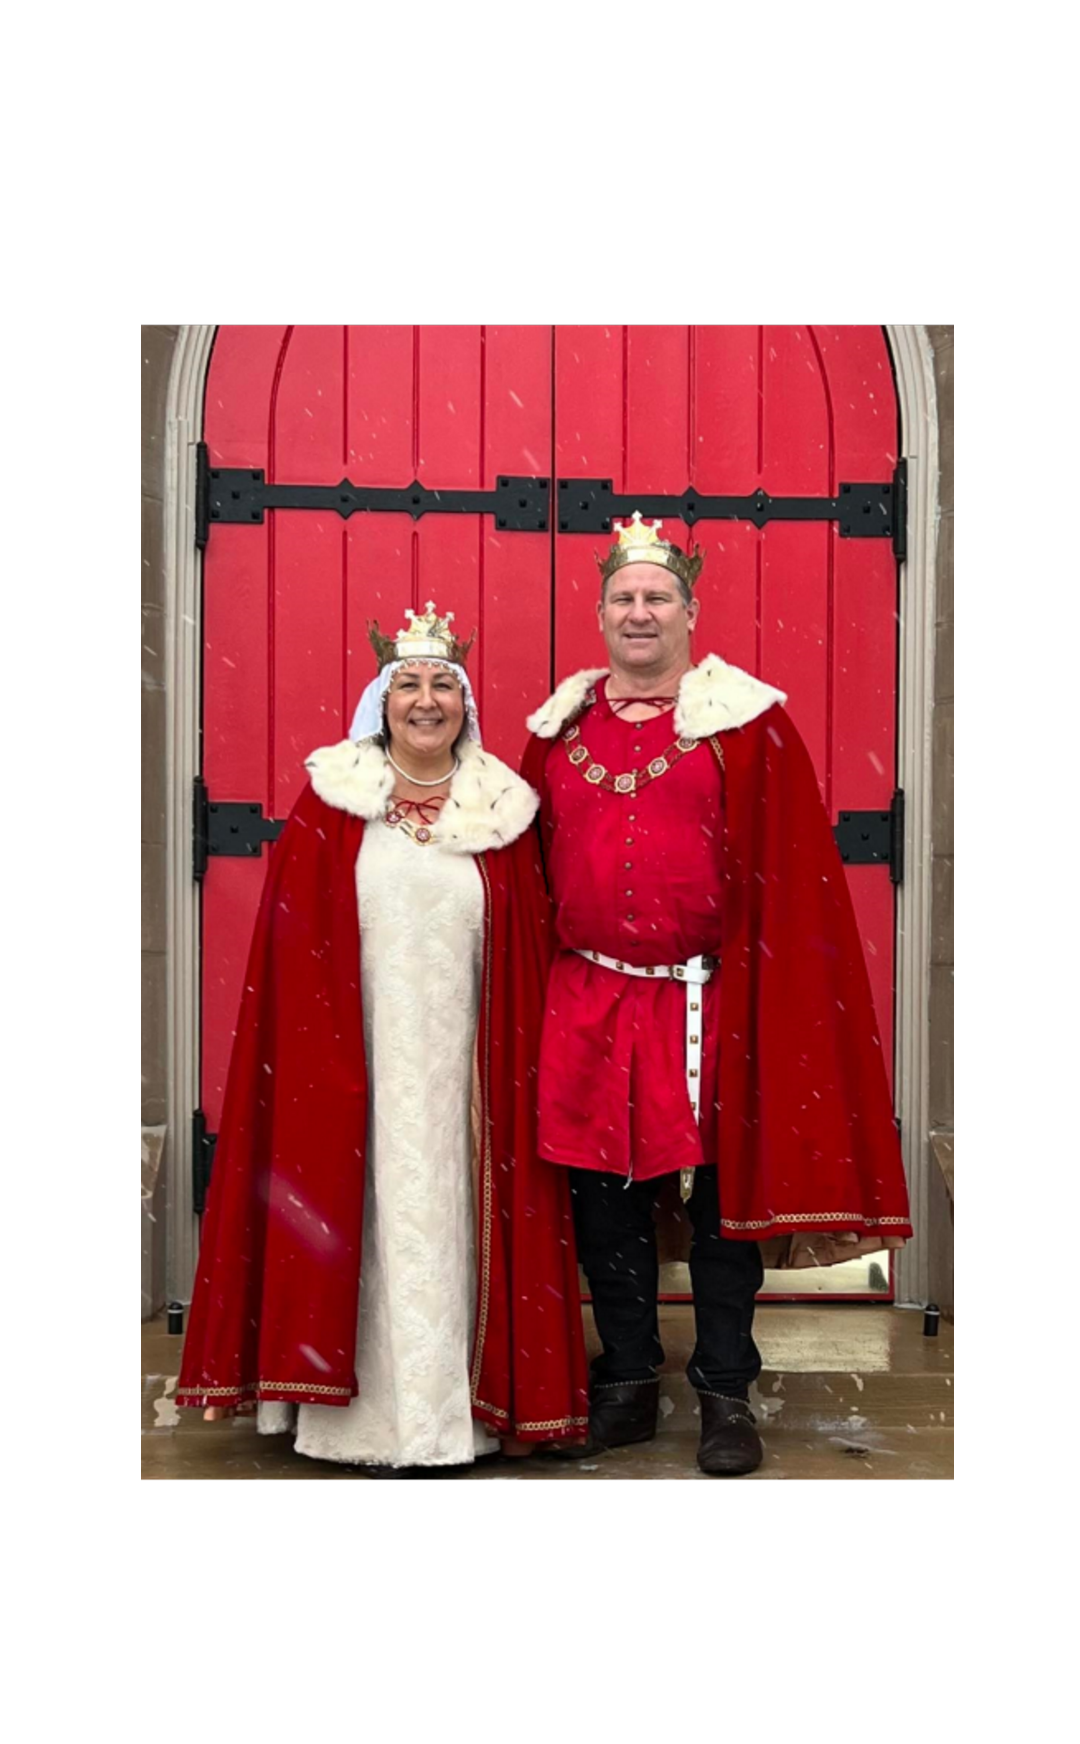 Their Sylvan Majesties King Arnthor Inn Sterki and Queen Ceirech Na Hinnsi